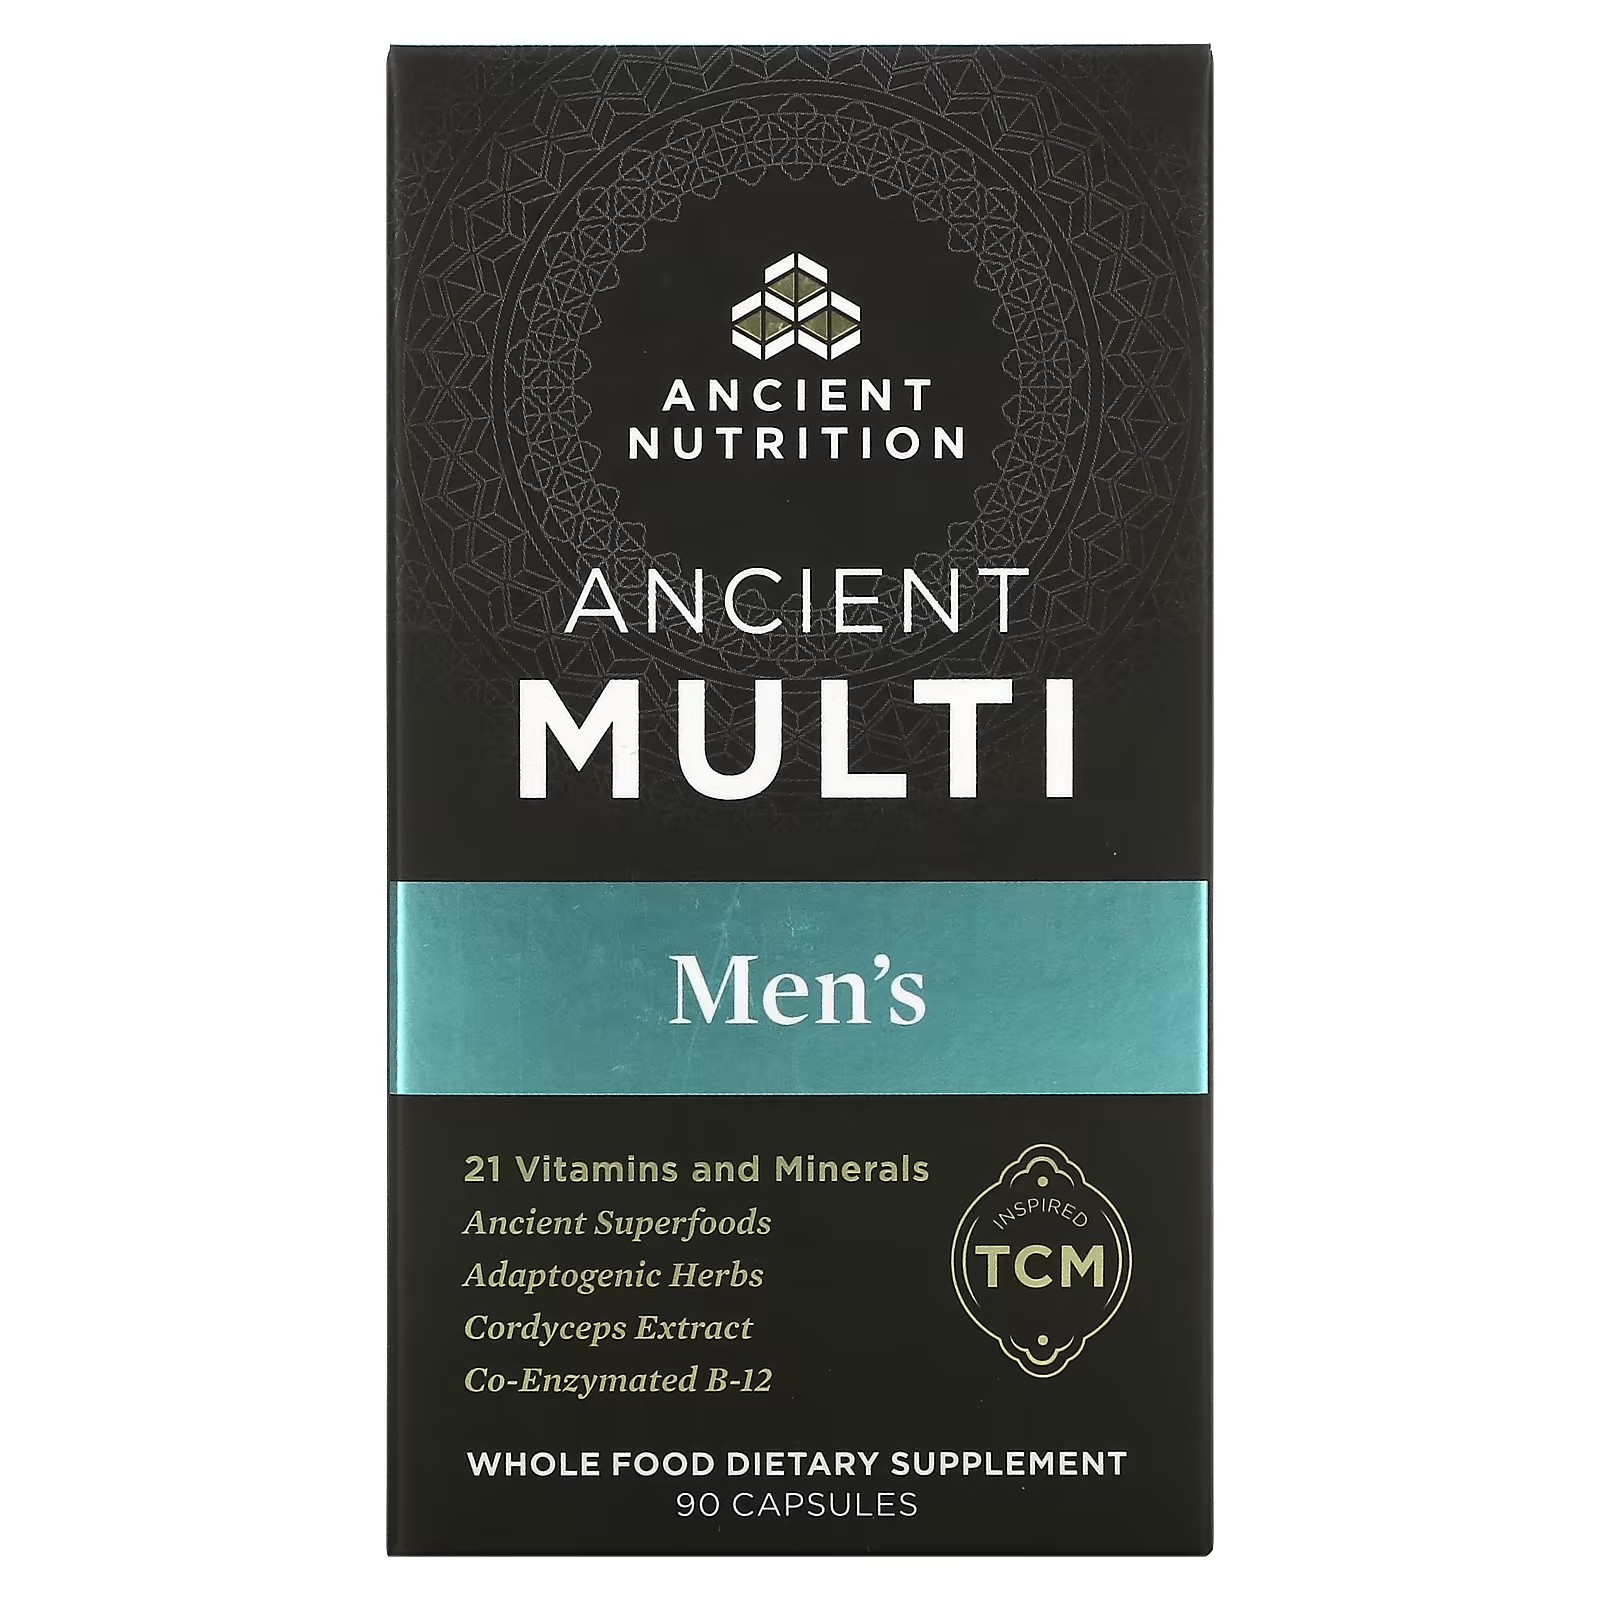 Мультивитамины для Мужчин Dr. Axe / Ancient Nutrition, 90 капсул мультивитамины для мужчин от 40 bluebonnet nutrition 60 капсул